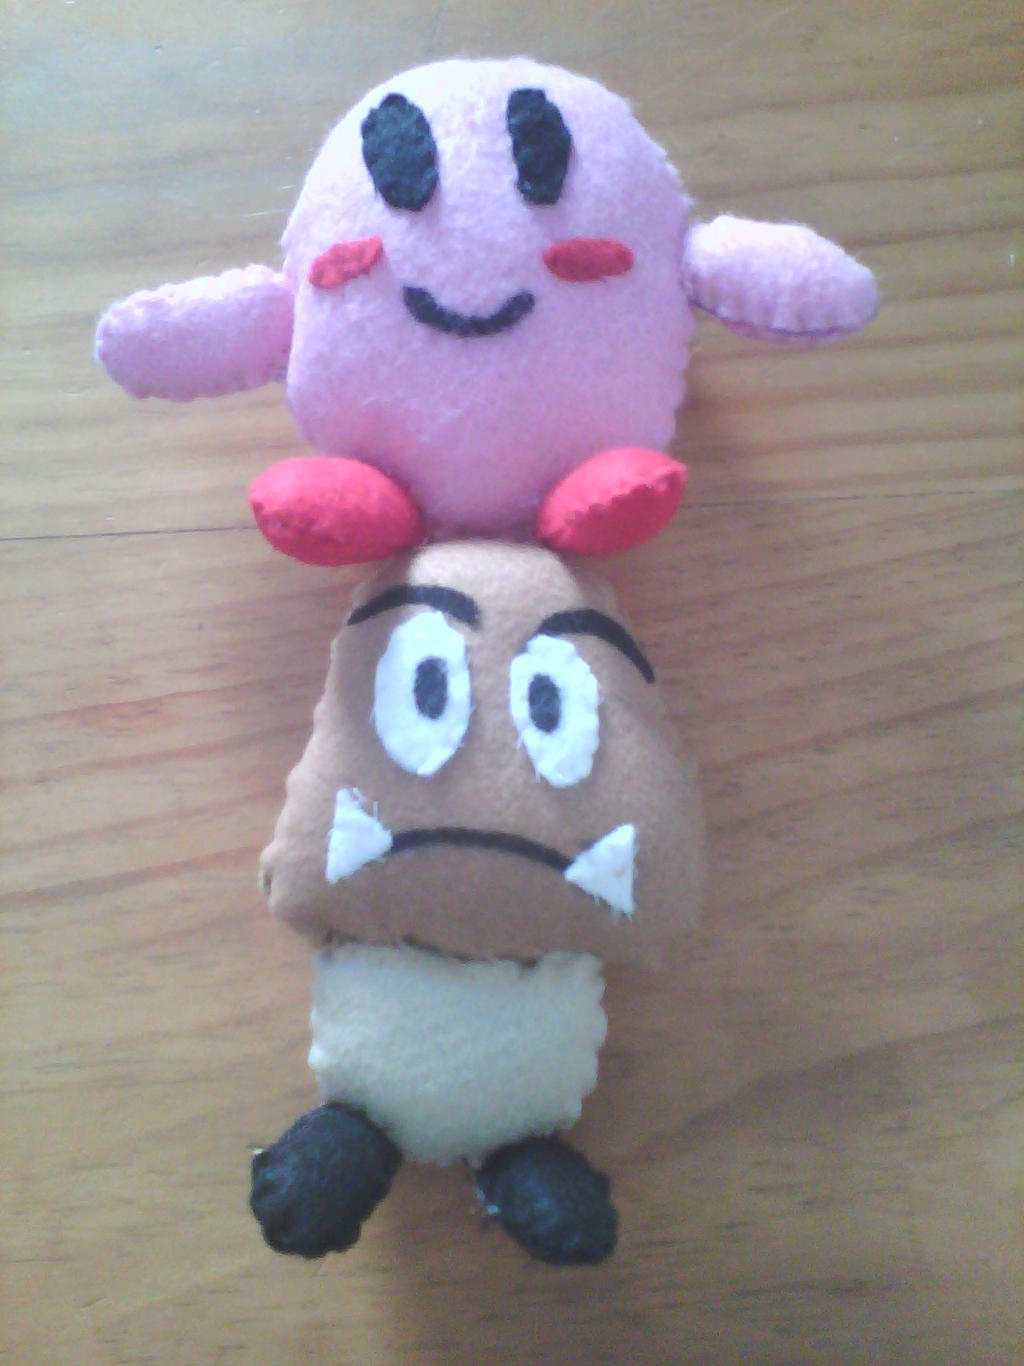 Kirby and Goomba